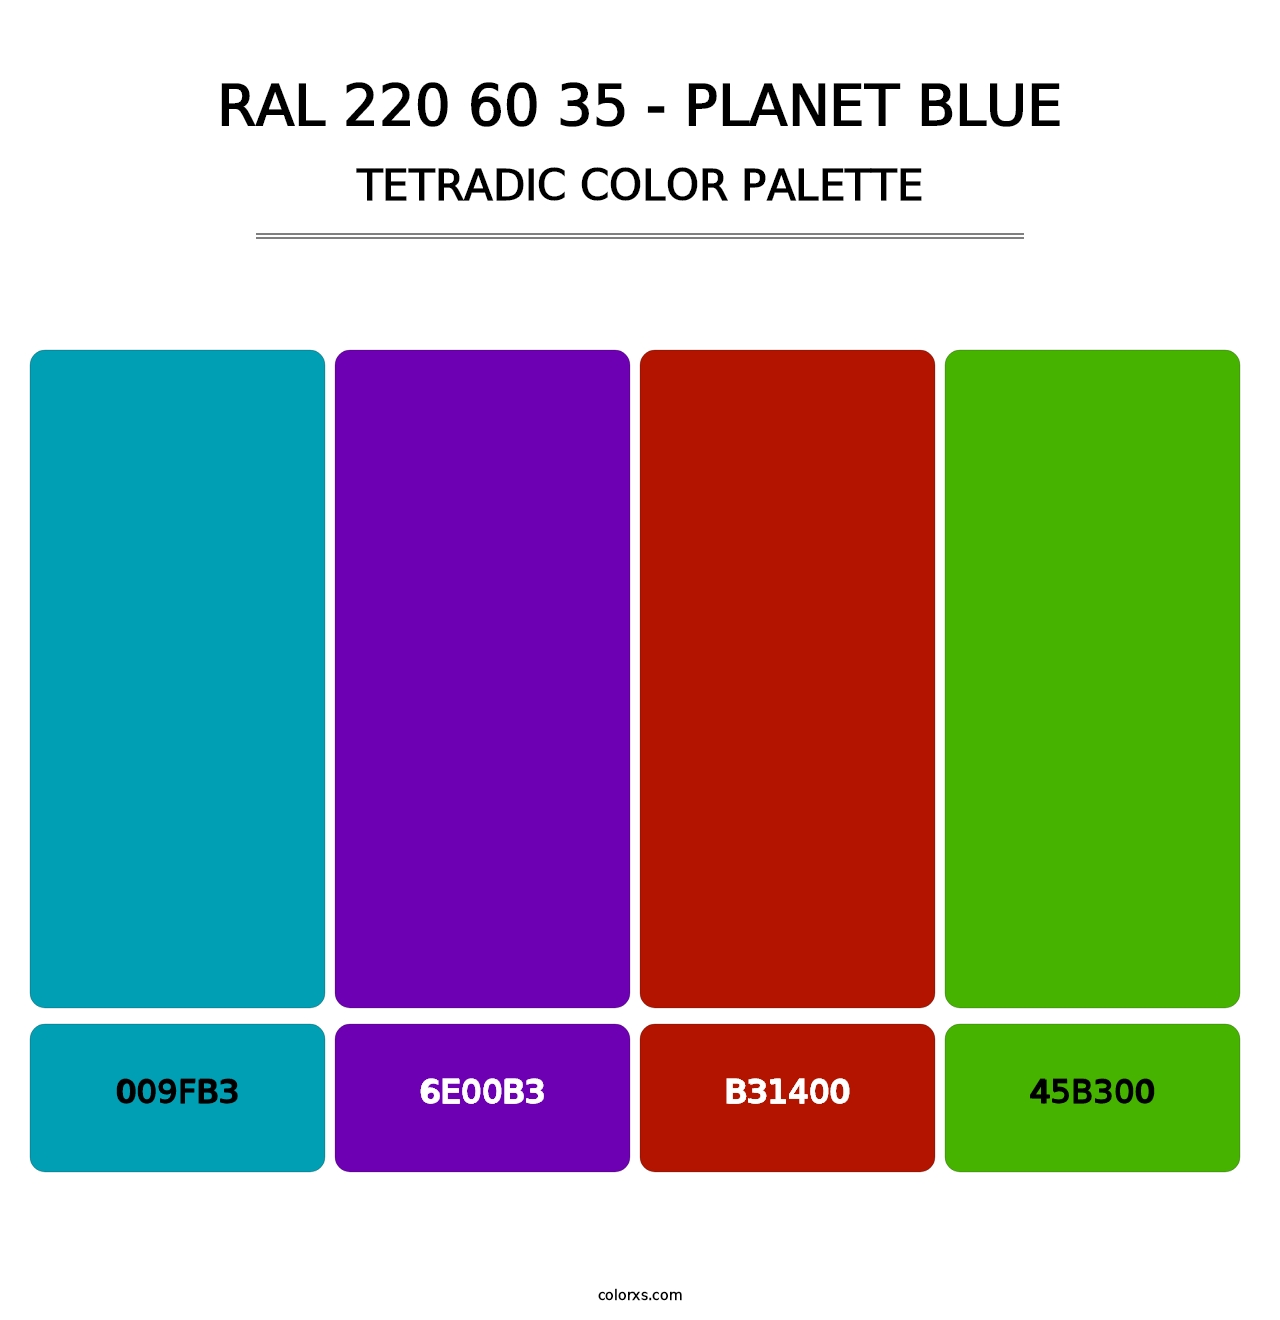 RAL 220 60 35 - Planet Blue - Tetradic Color Palette